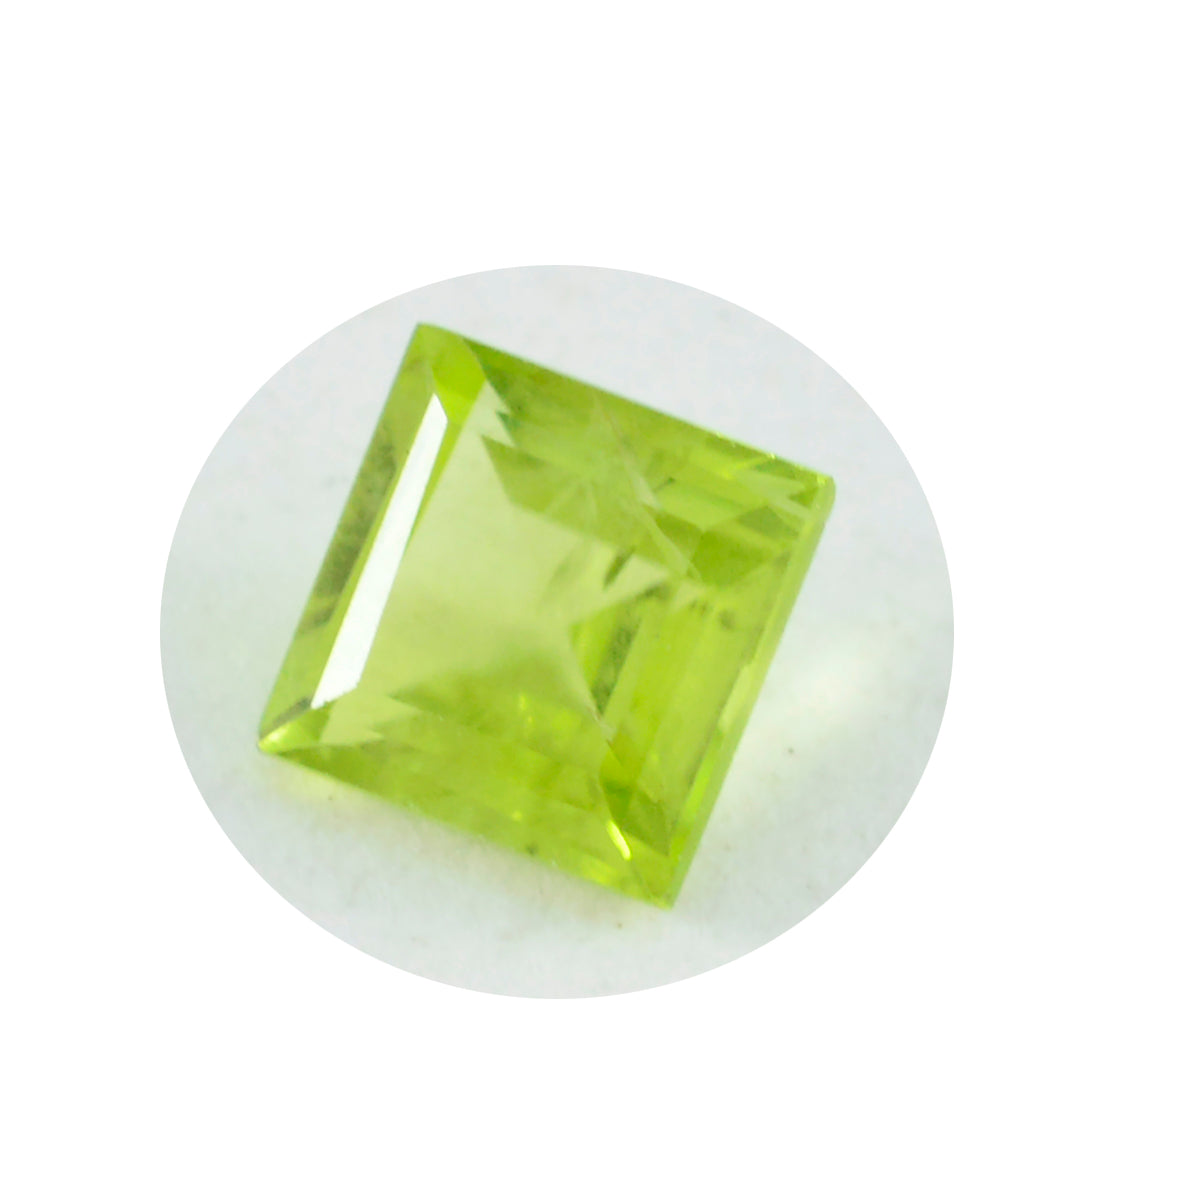 riyogems 1pc ナチュラル グリーン ペリドット ファセット 13x13 mm 正方形の形状の驚くべき品質のルース宝石